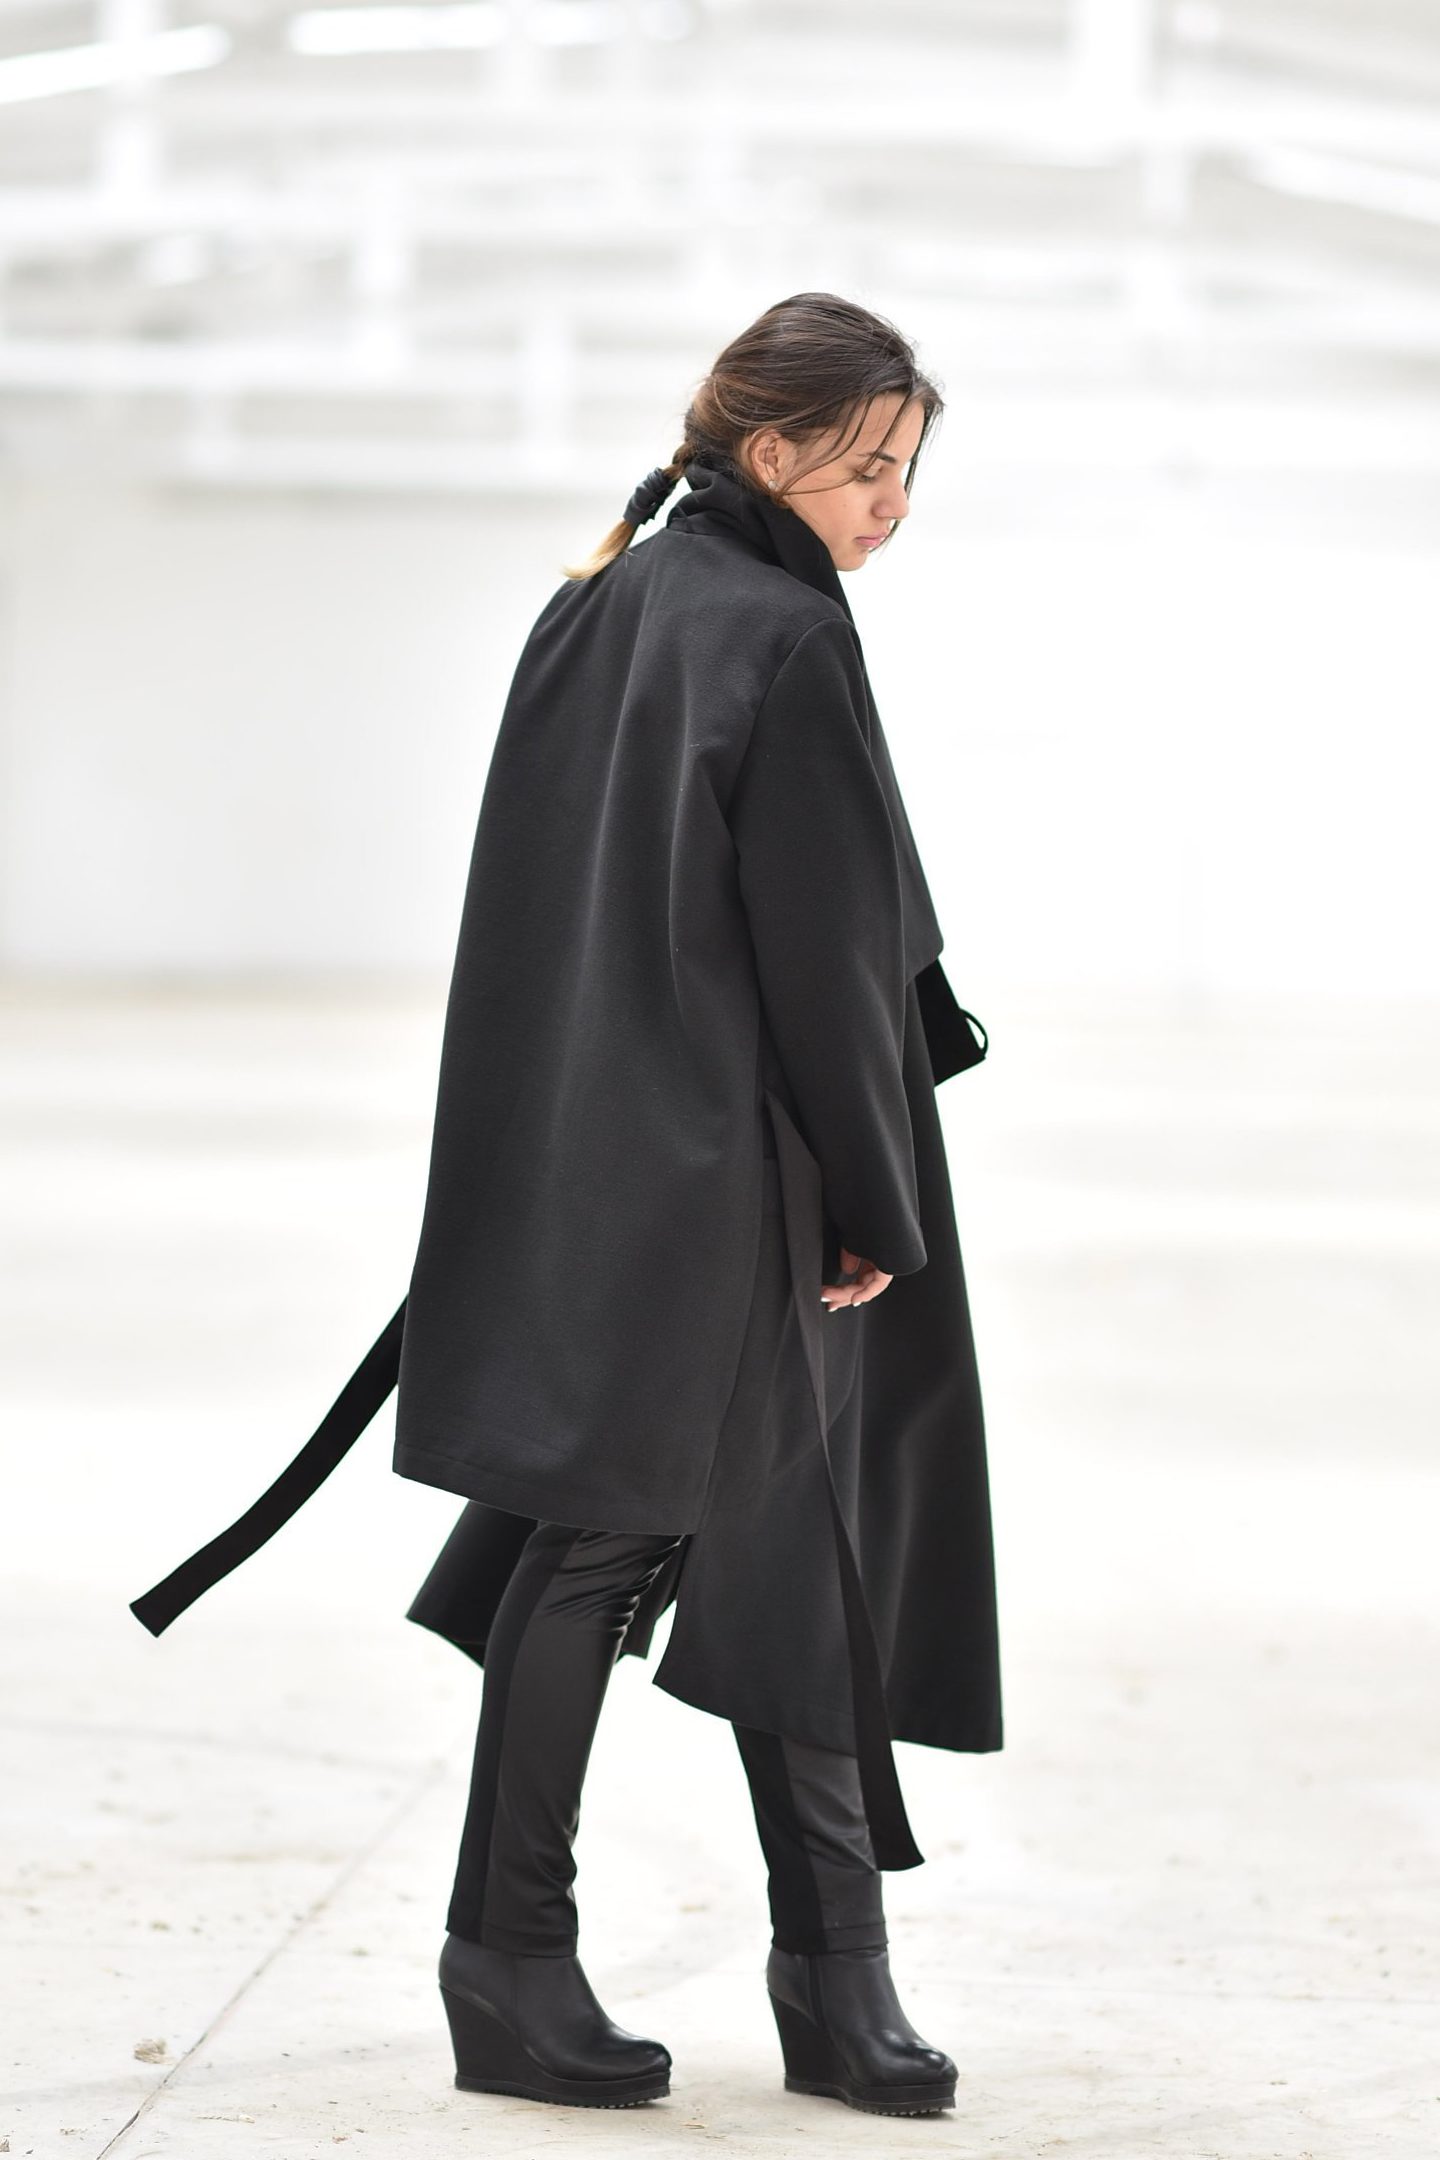 Asymmetrical Wool Coat in Black, Winter Coat Women, Wool Coat, High Collar Wool  Coat, Plus Size Coat, Womens Autumn Winter Outfit C987 -  Canada